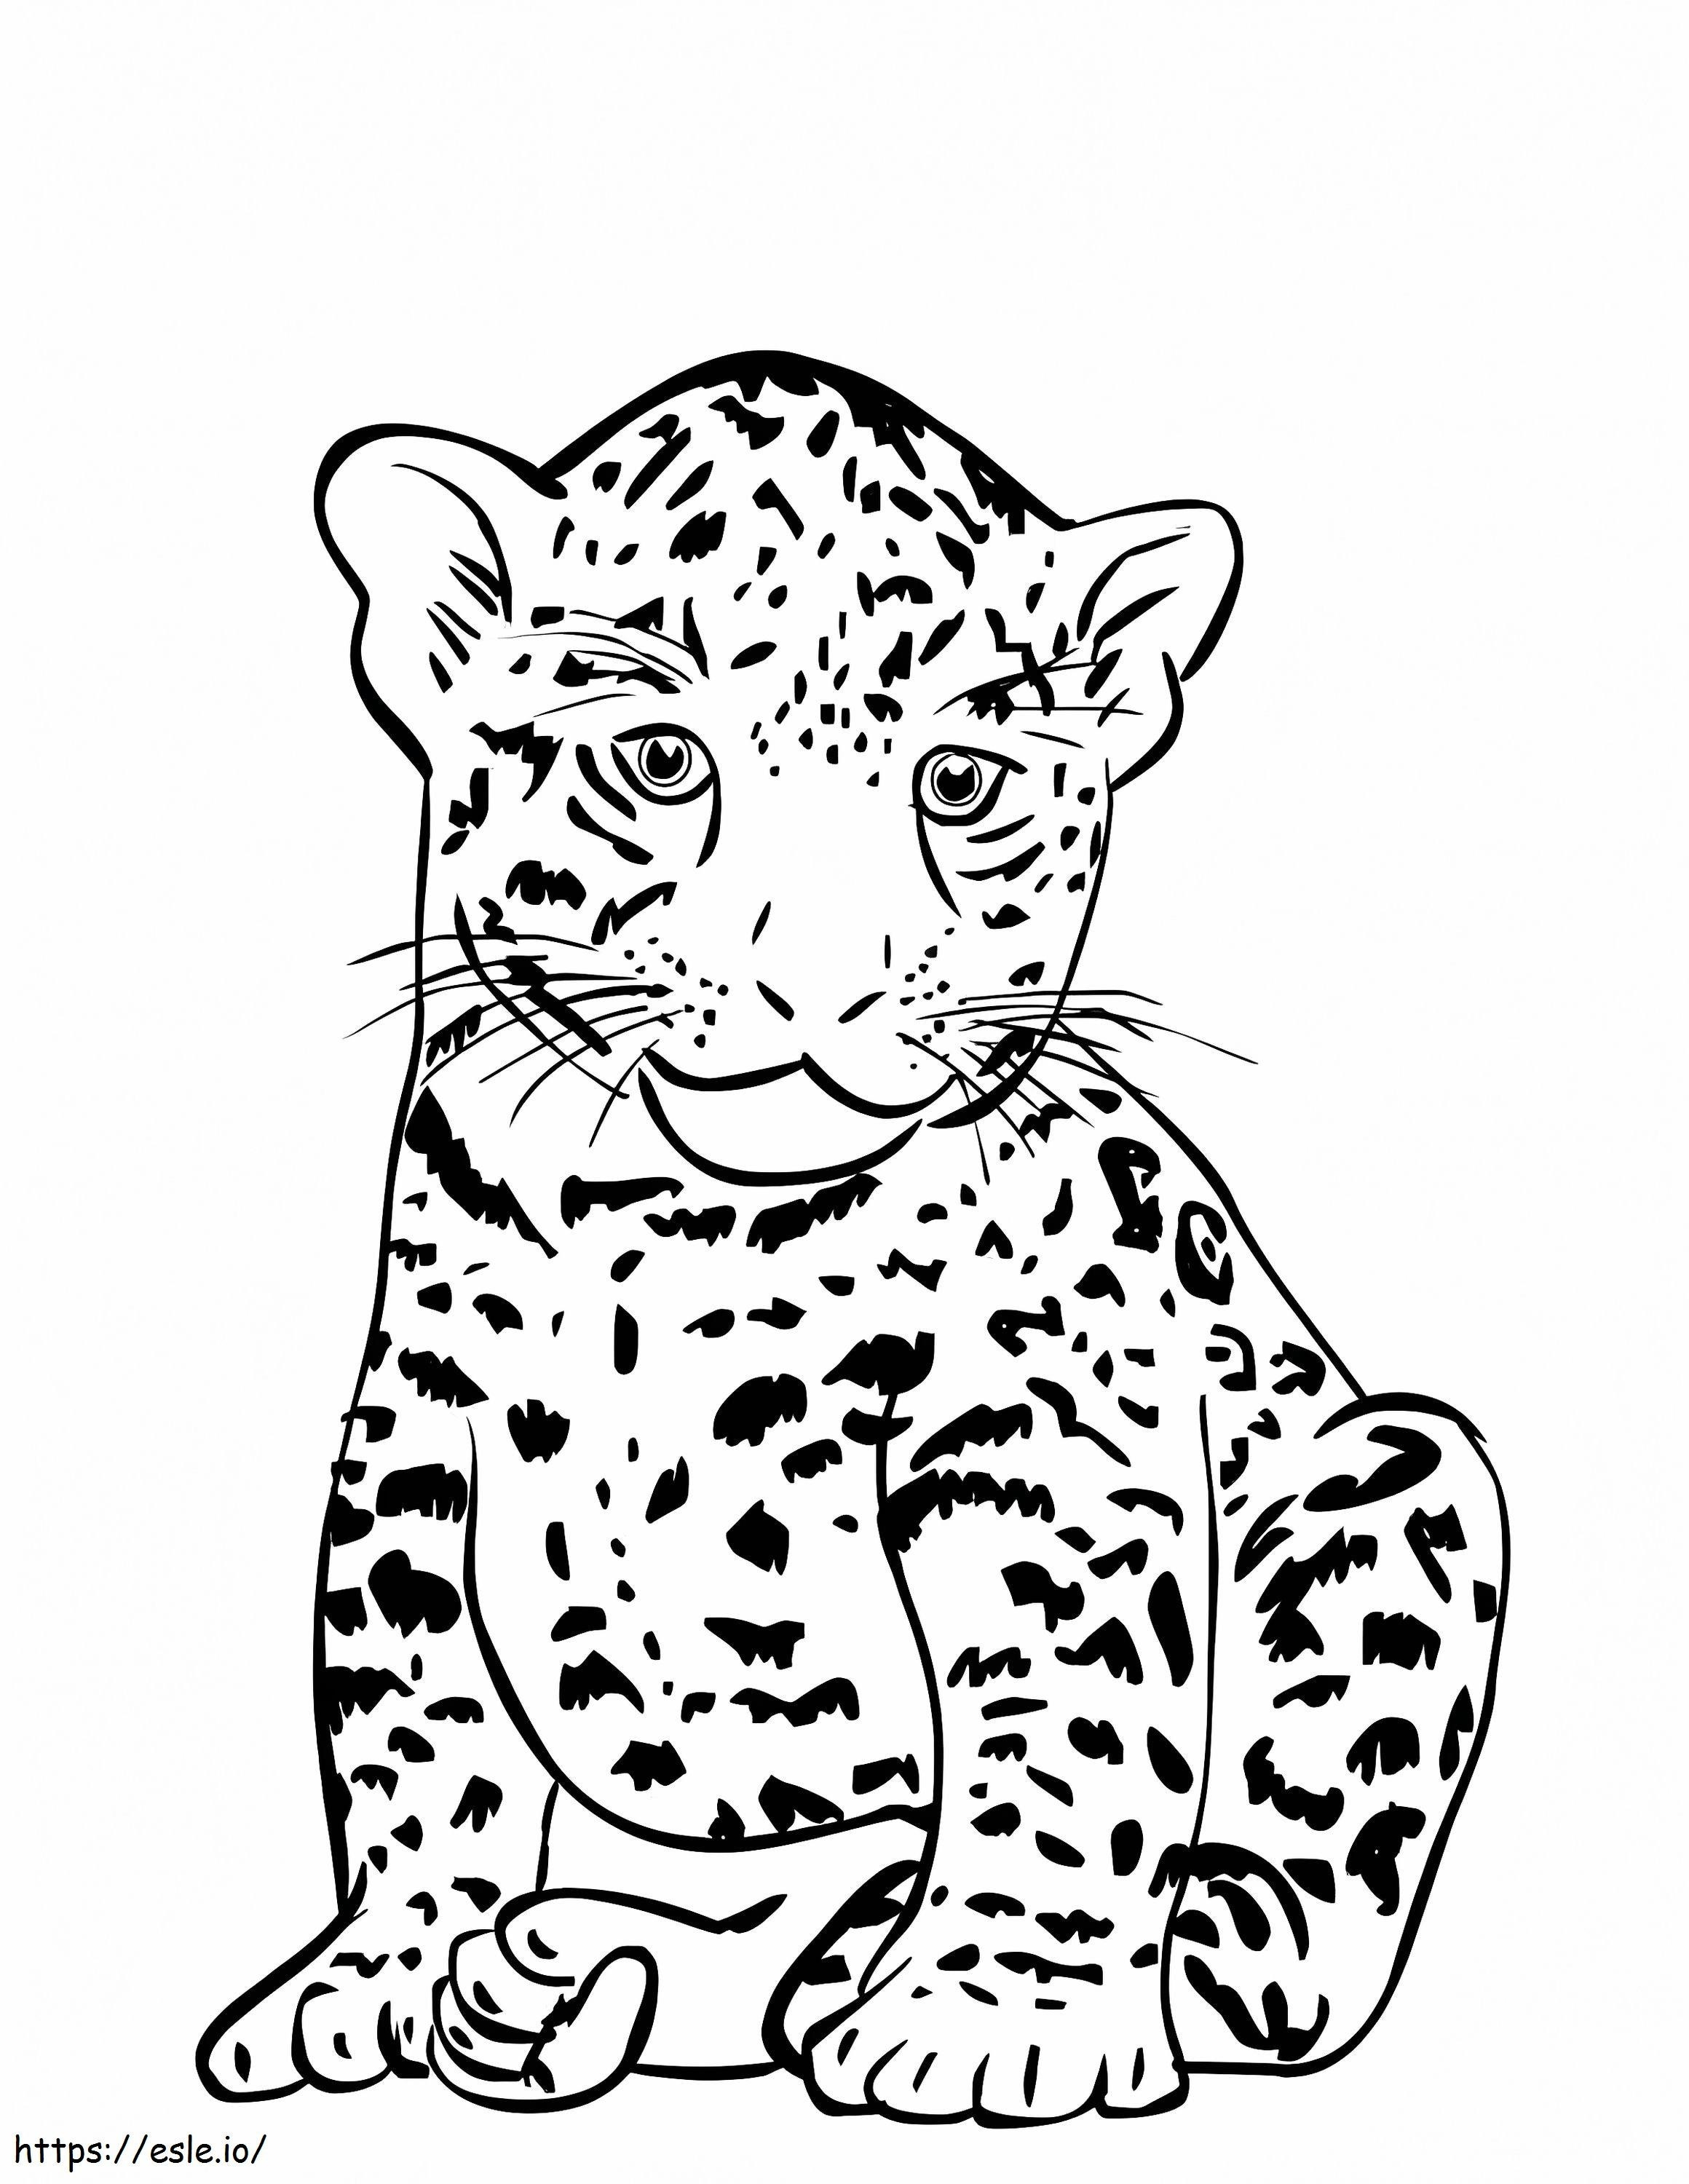 Baby Jaguar Sitting coloring page